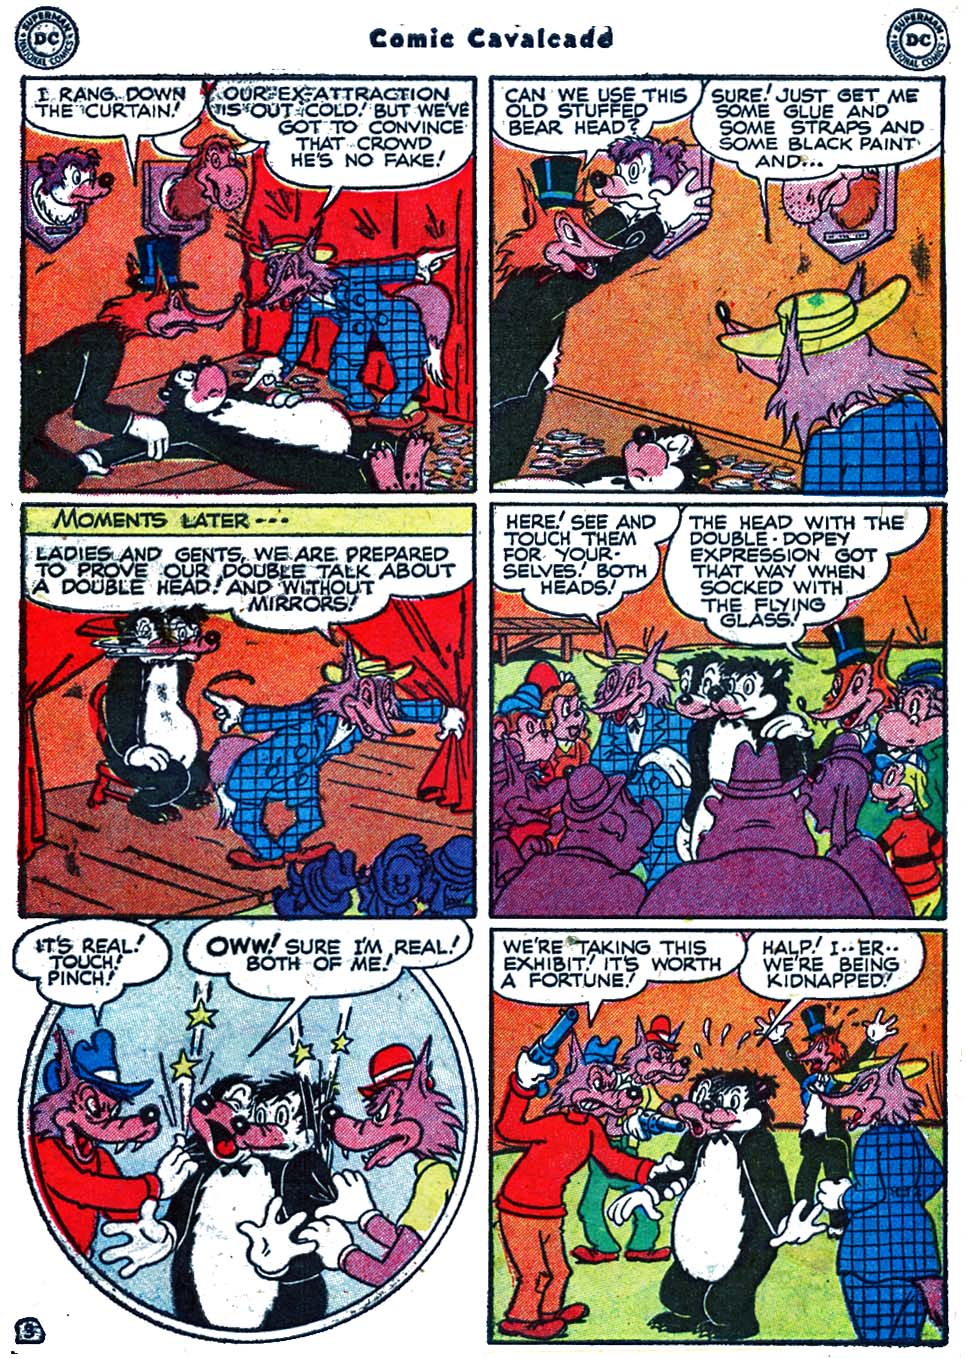 Comic Cavalcade issue 47 - Page 57